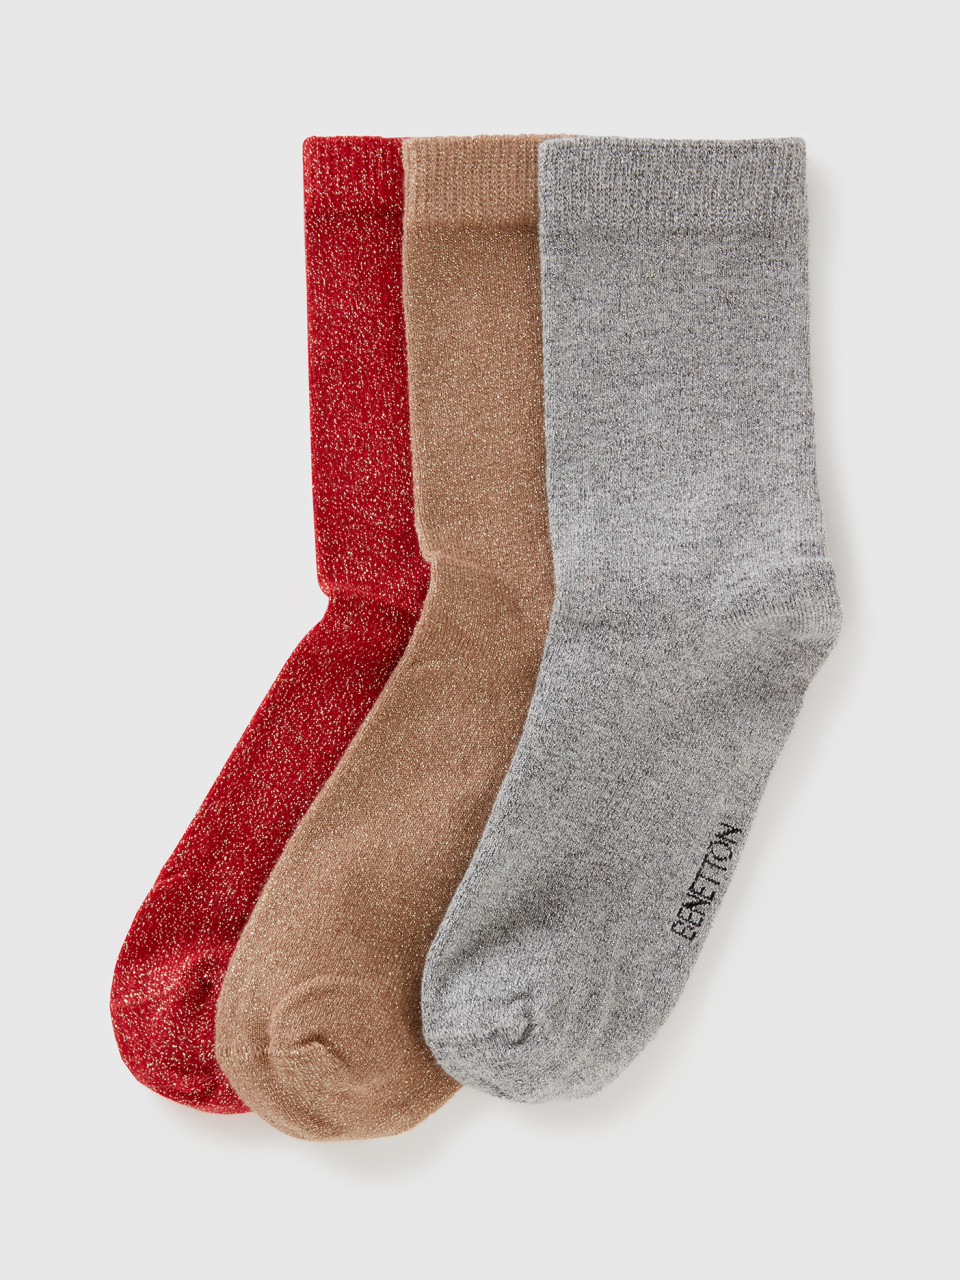 Benetton, Long Socks With Lurex, Multi-color, Kids